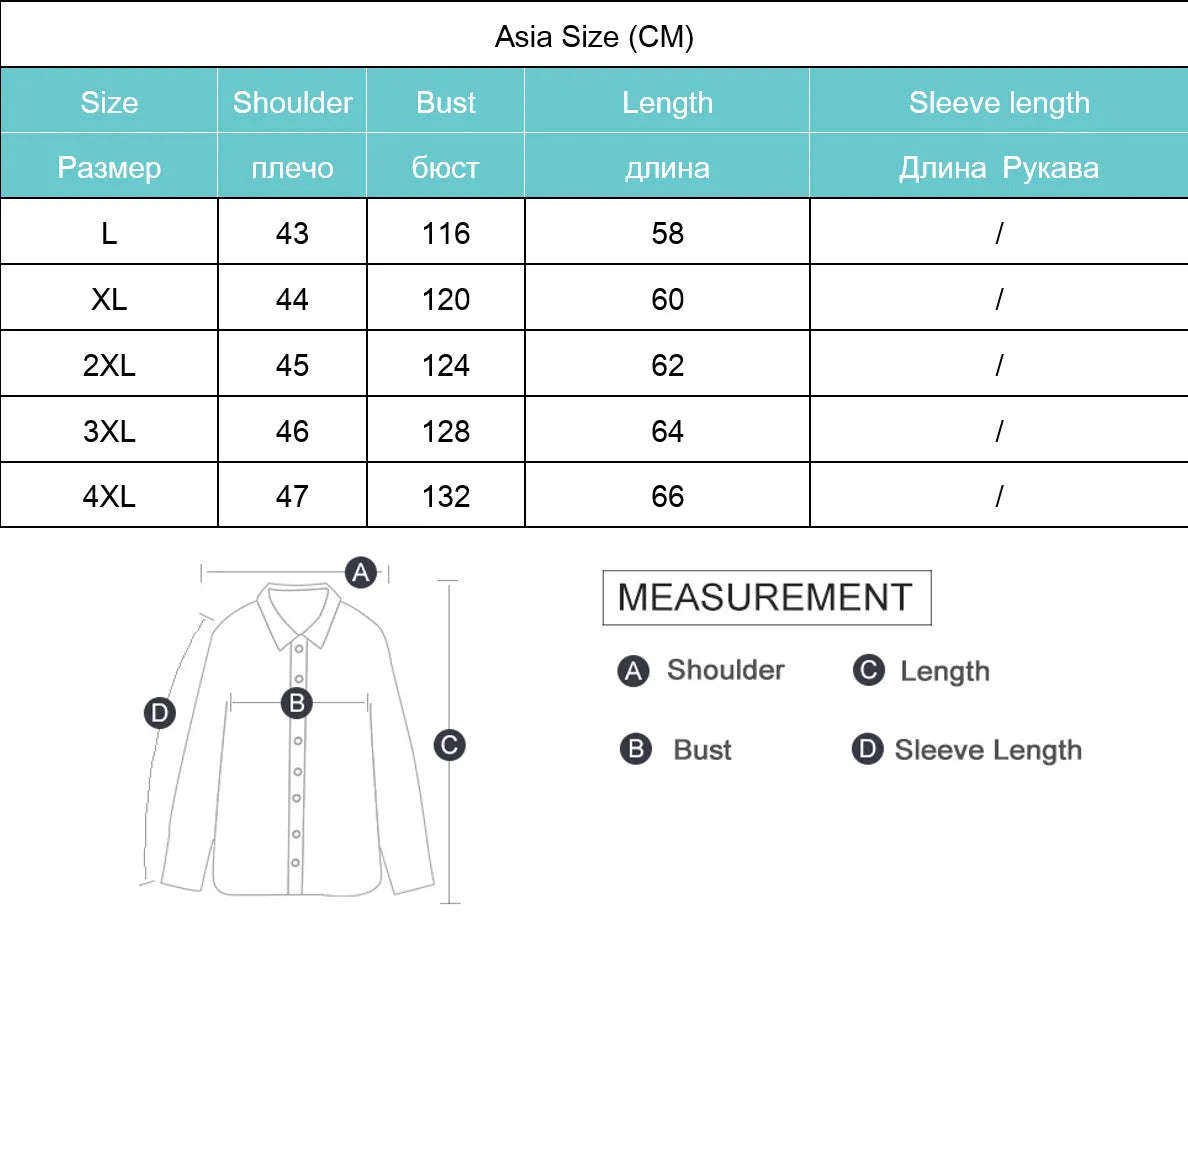 Outdoor Leisure Vest Men's New Multi-Pocket Breathable Outdoor Sports Coat High-Quality Design Leisure Vest Men voguable